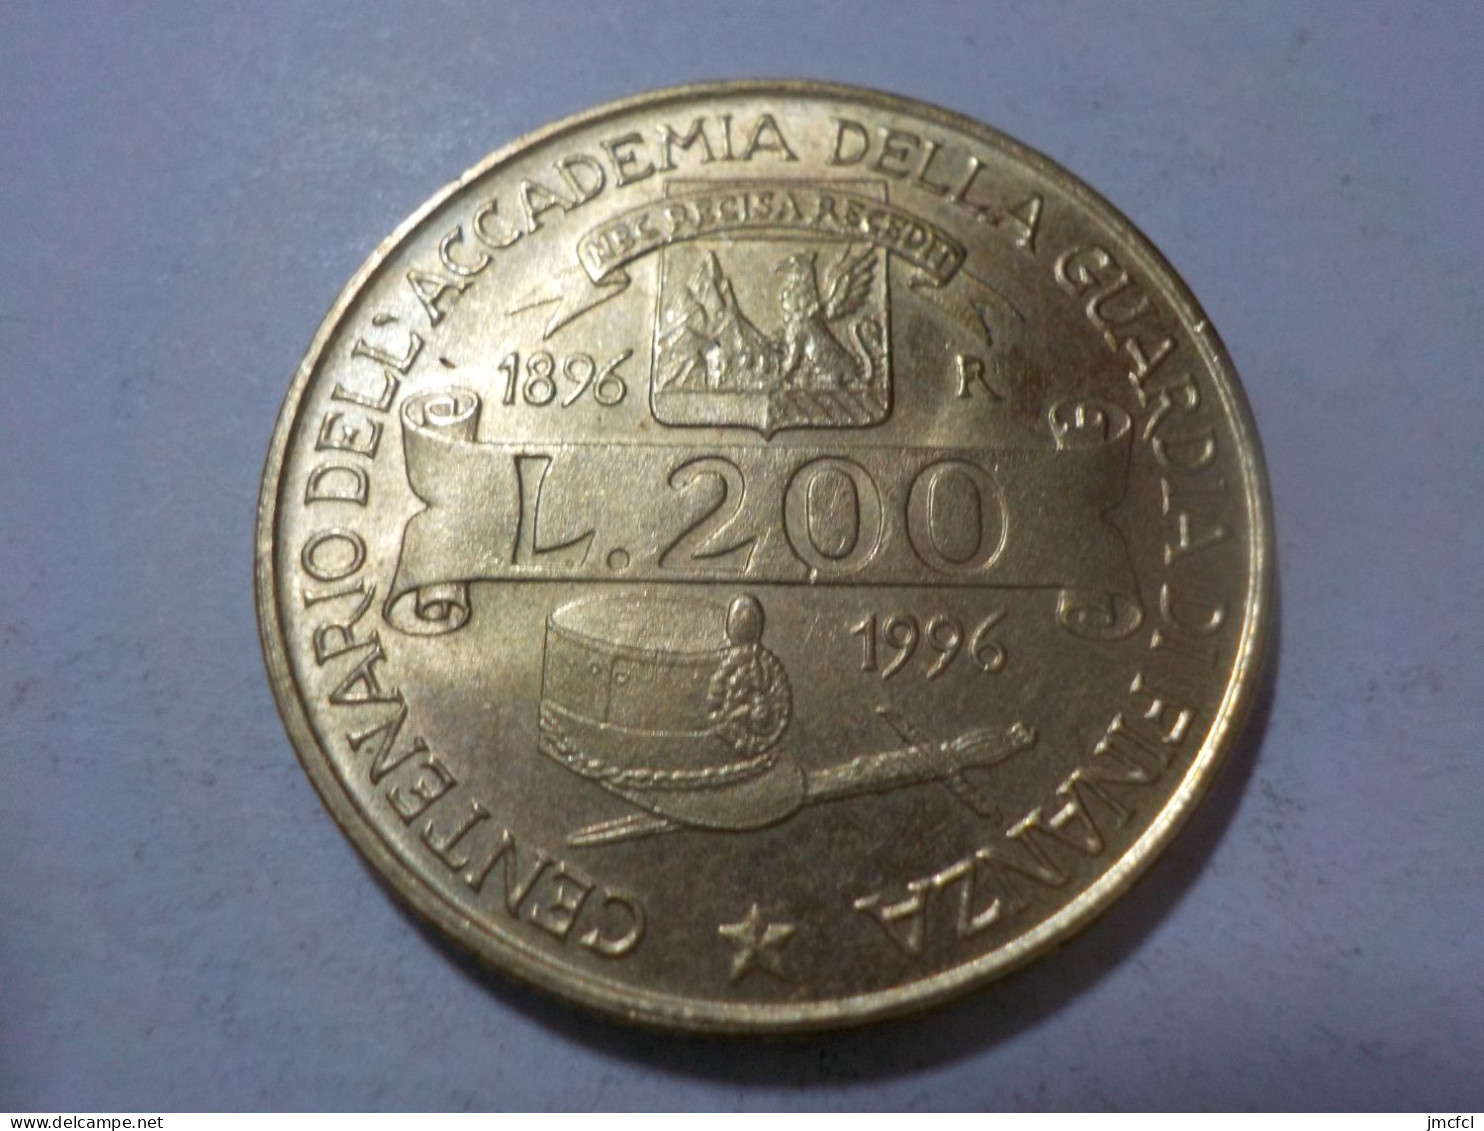 ITALIE  1996    200 Lire - 200 Lire